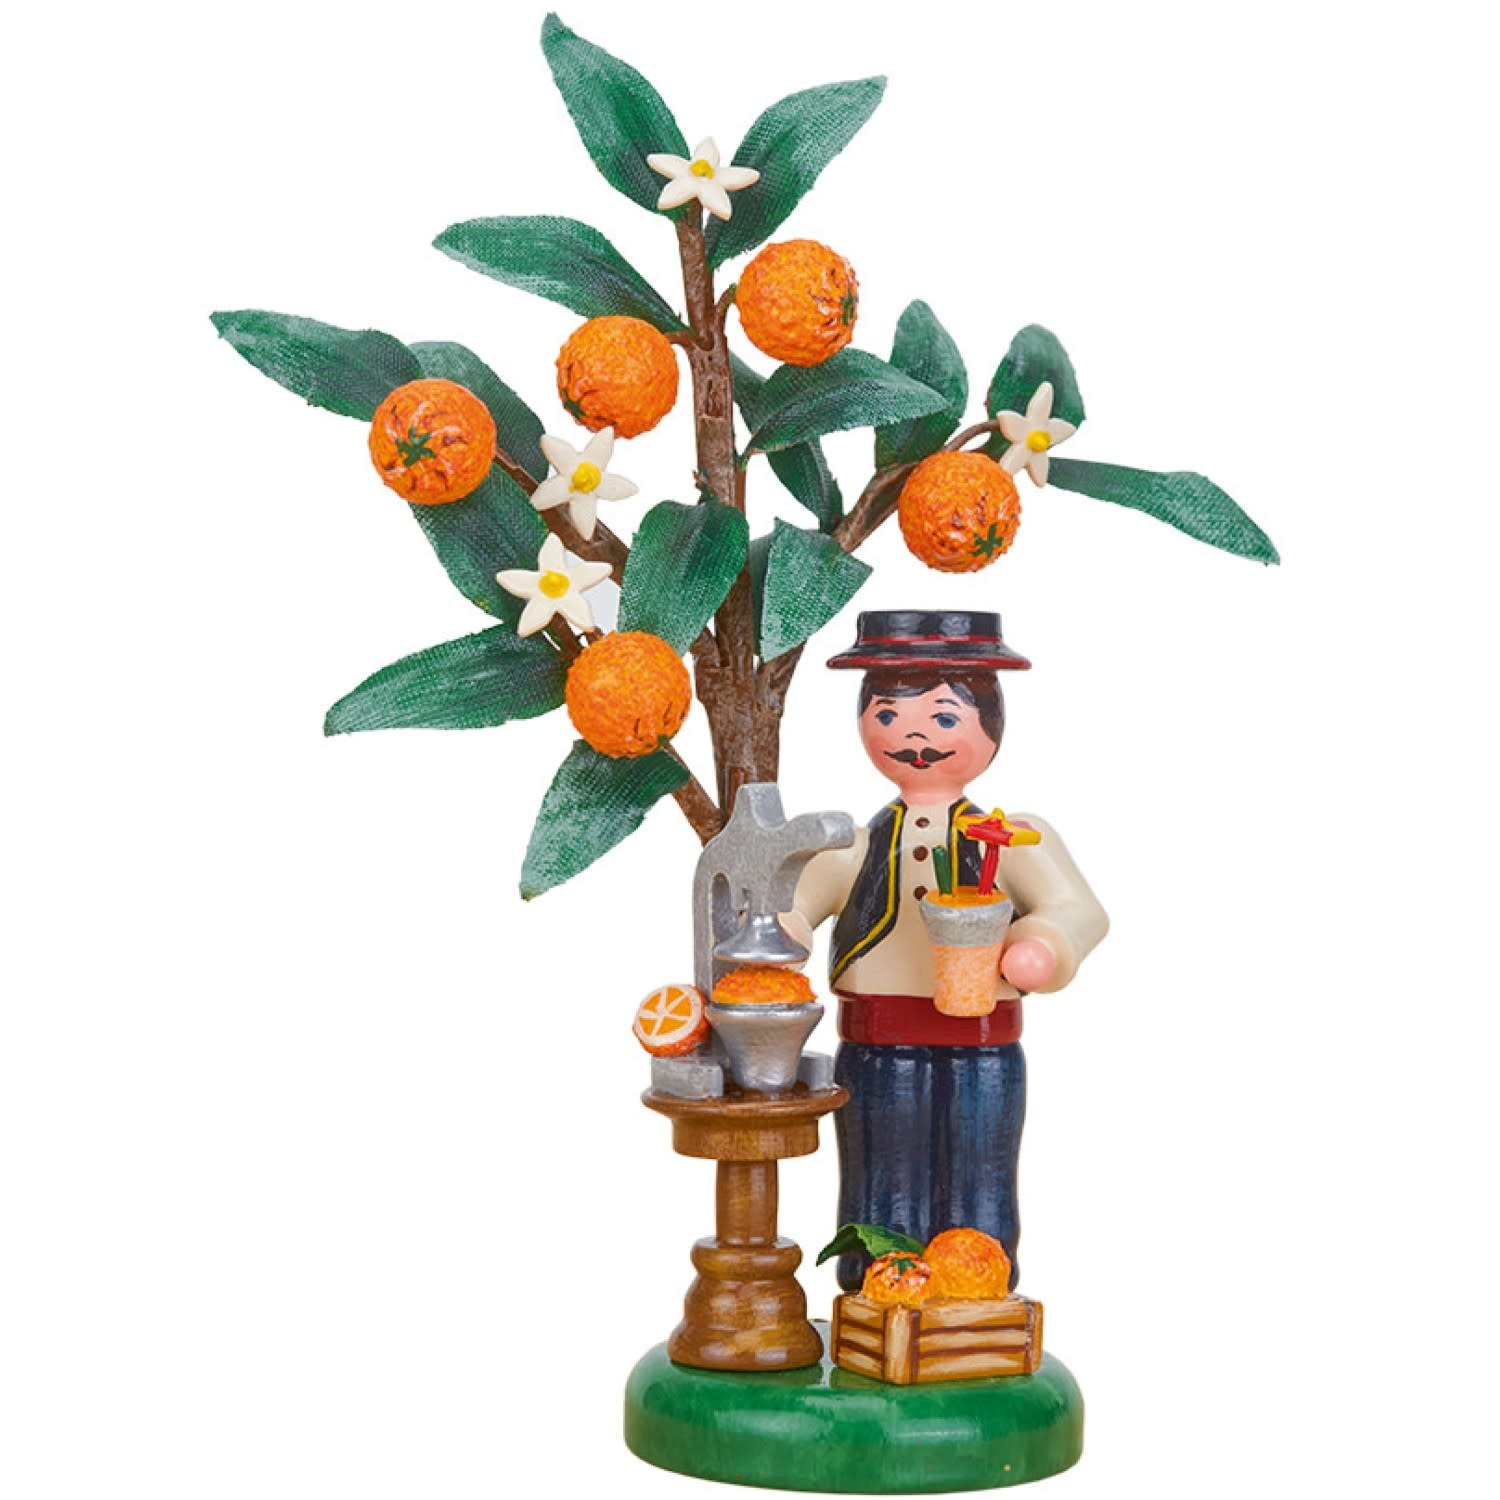 Hubrig 304h2021 Hubrig Annual Figurine 2021 - Orange